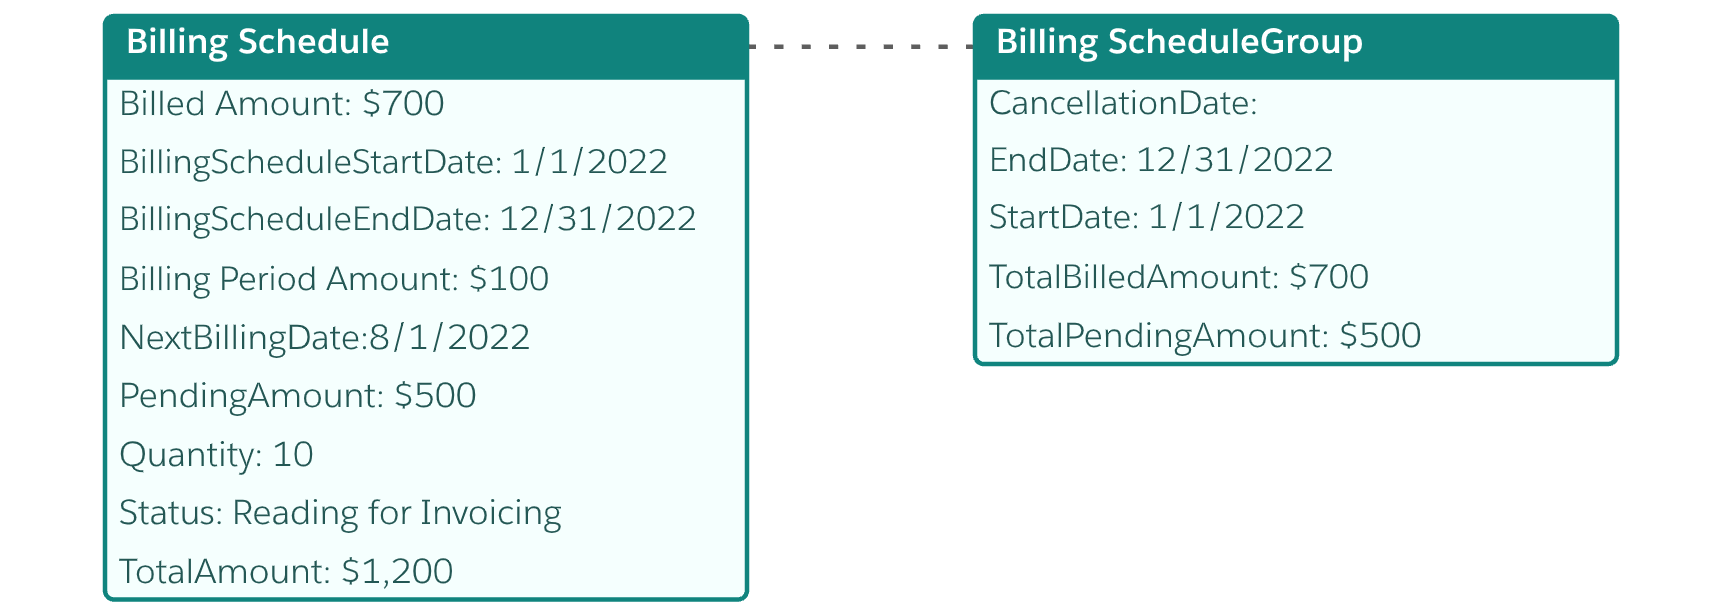 Initial Billing and Billing Schedule